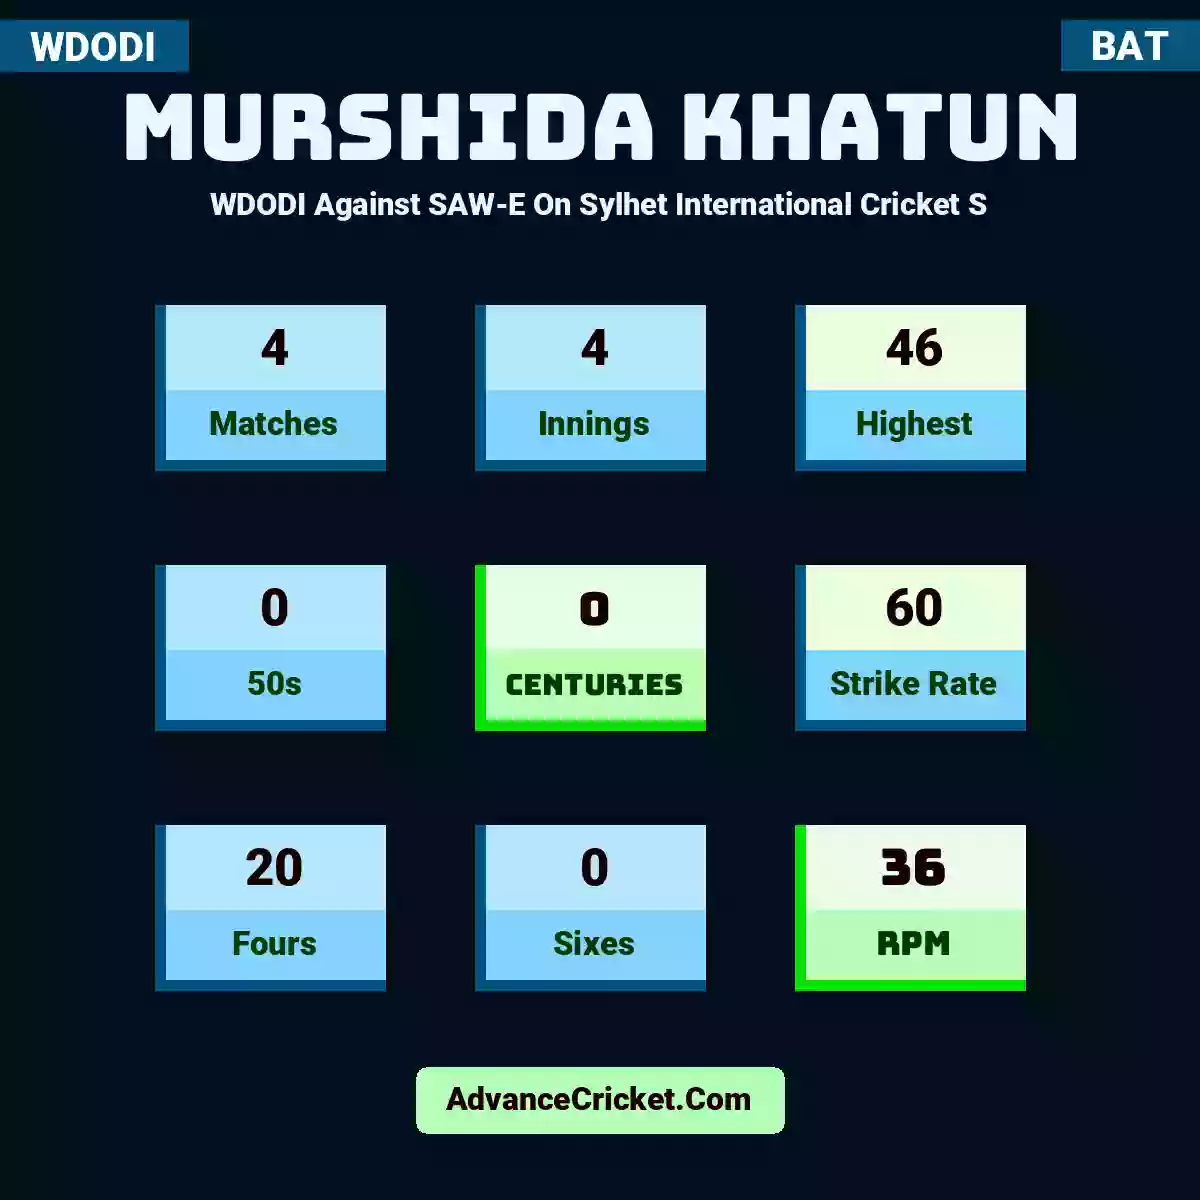 Murshida Khatun WDODI  Against SAW-E On Sylhet International Cricket S, Murshida Khatun played 4 matches, scored 46 runs as highest, 0 half-centuries, and 0 centuries, with a strike rate of 60. M.Khatun hit 20 fours and 0 sixes, with an RPM of 36.